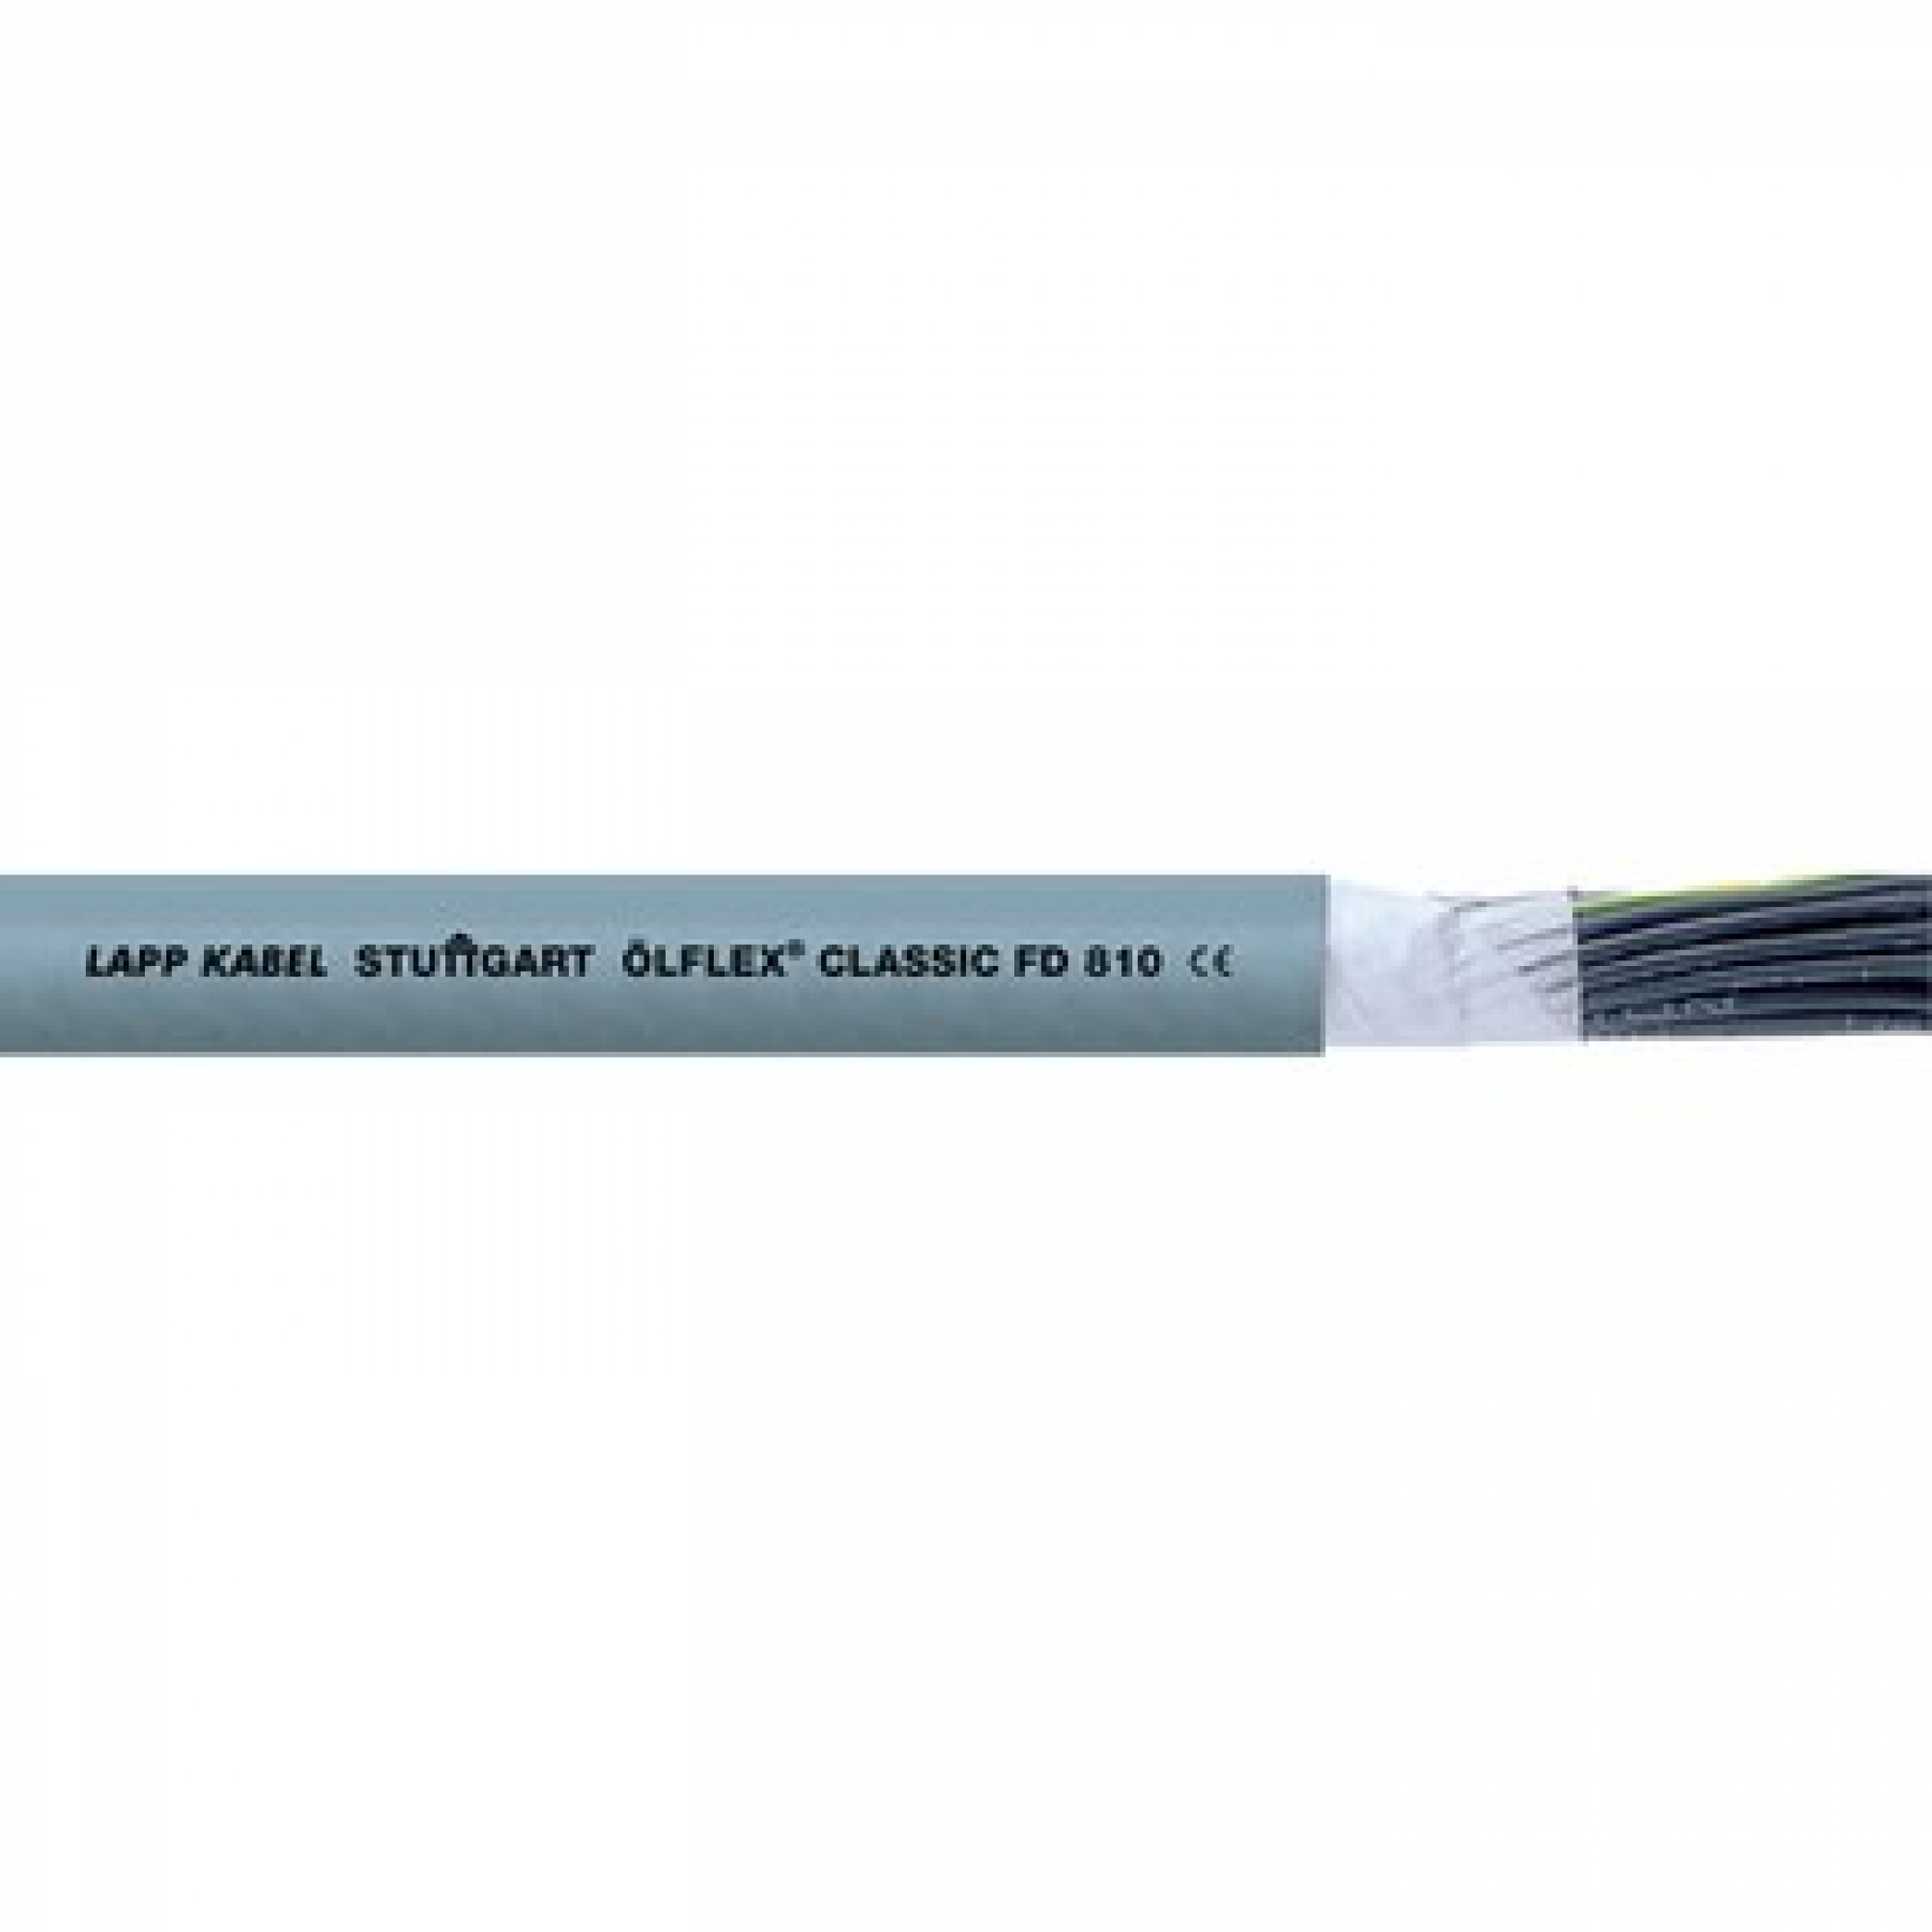 Control Cable ÖLFLEX® CLASSIC FD 810 G 3 x 0.5 mm²